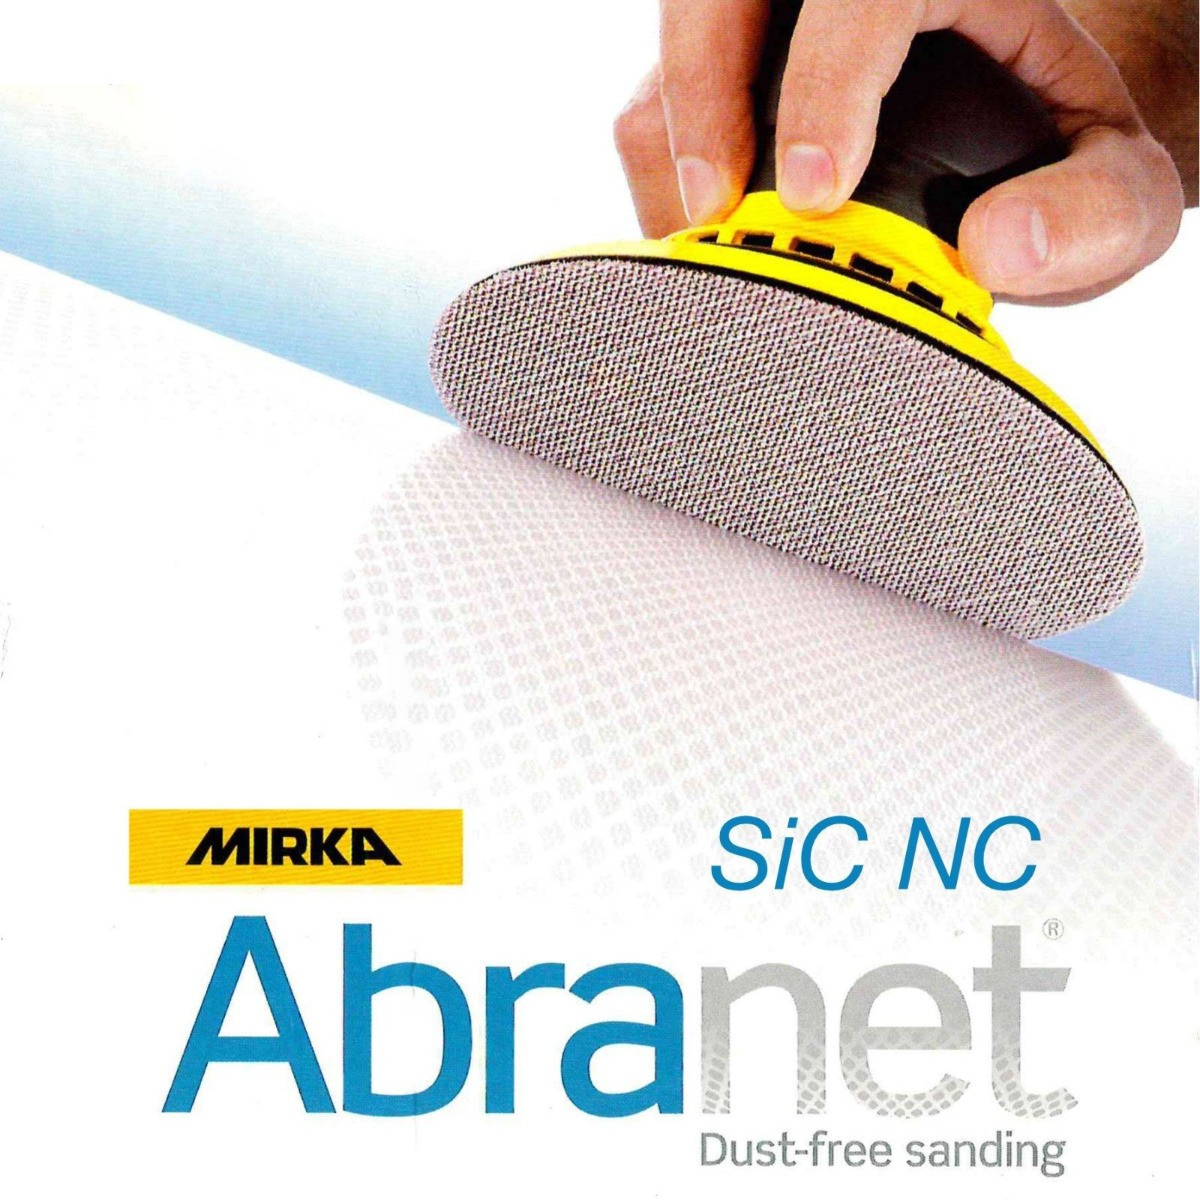 MIRKA AbraNet 150 mm abrasive discs